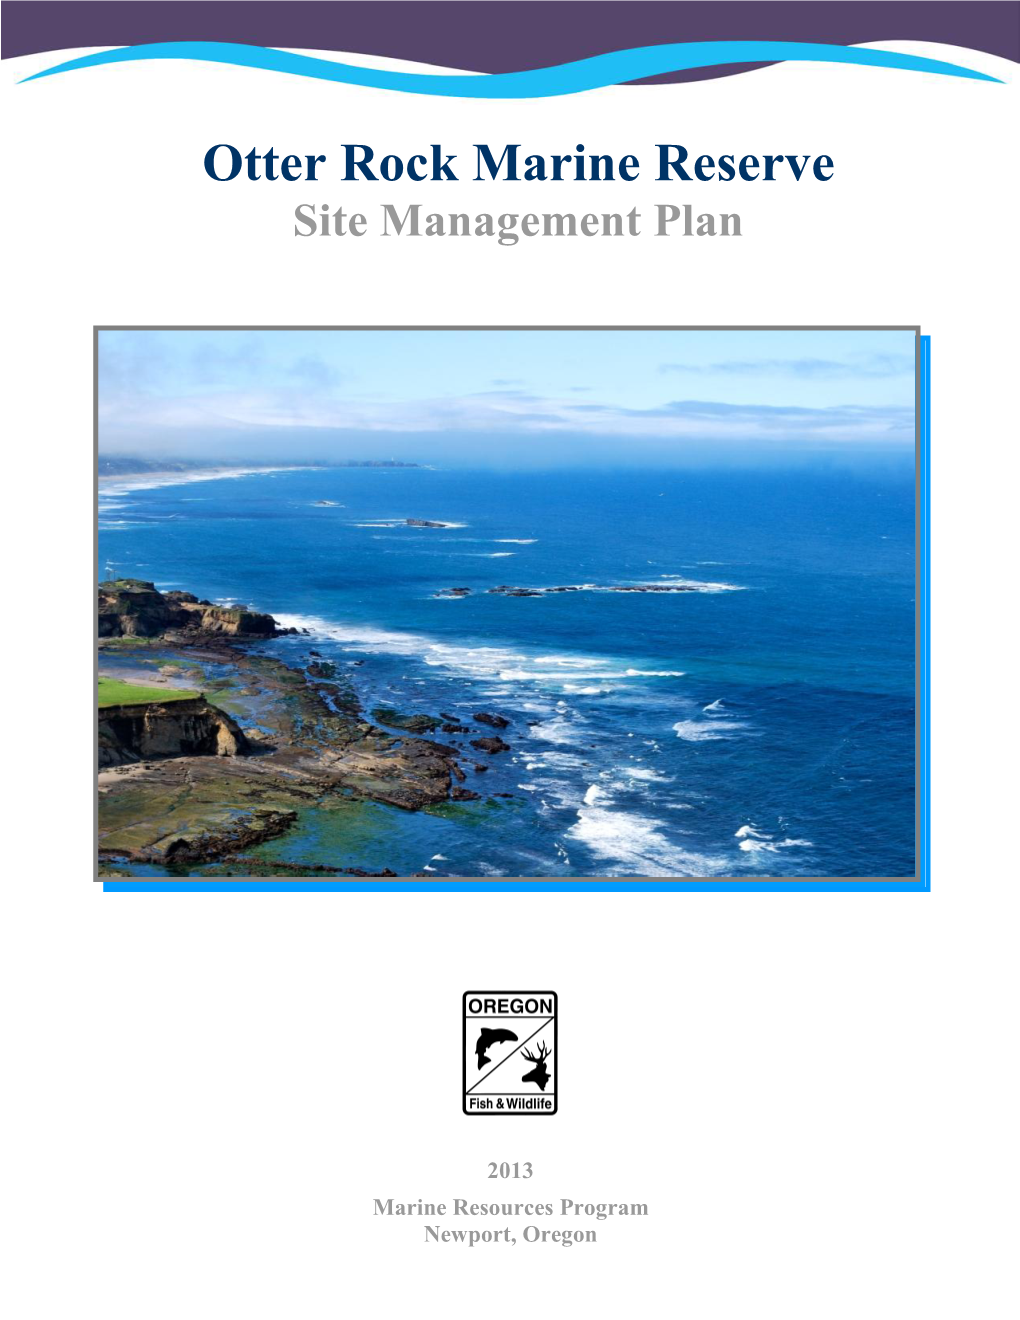 Otter Rock Management Plan